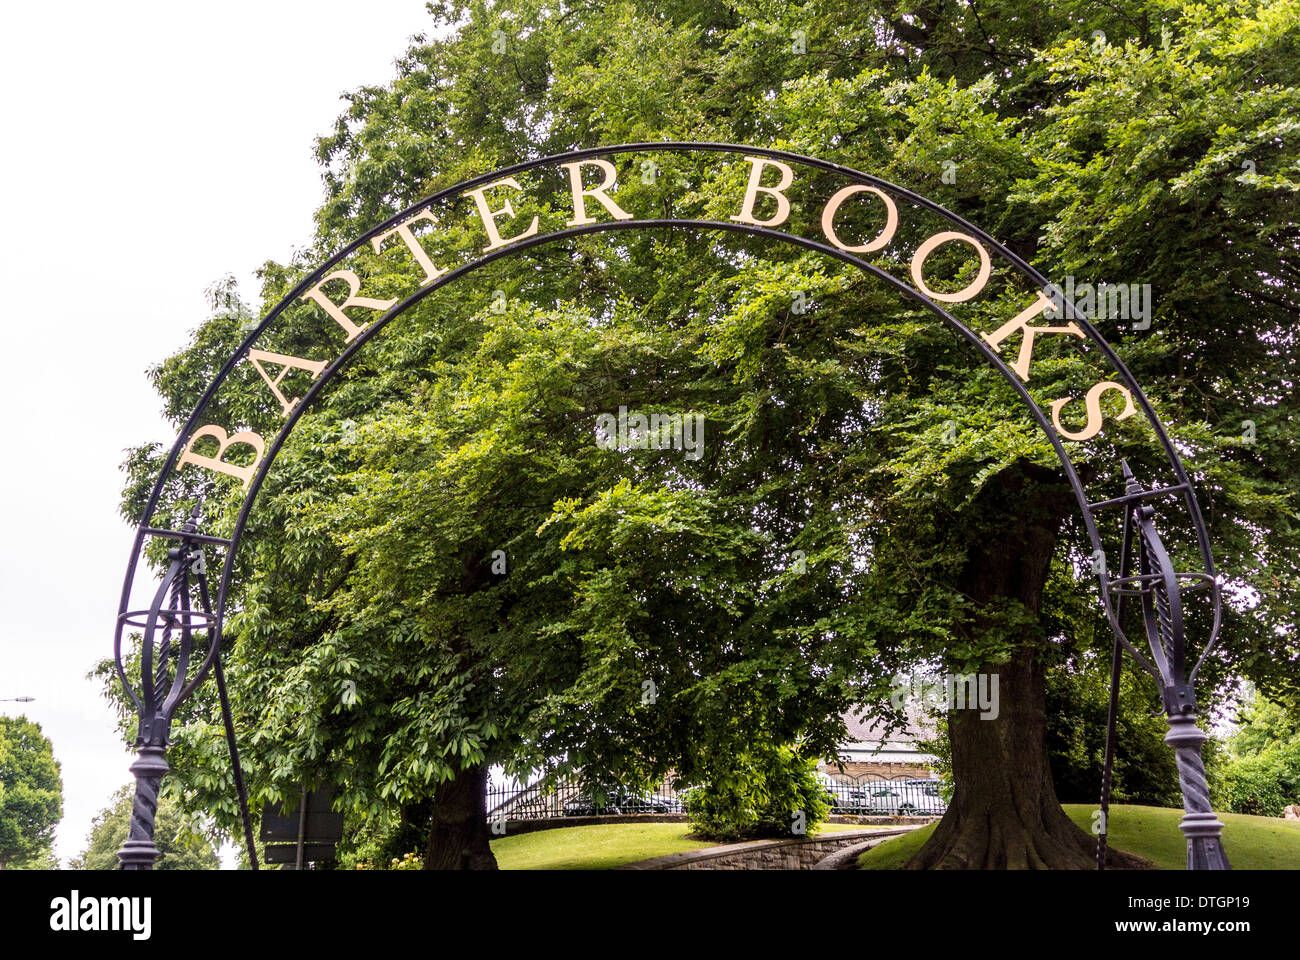 Barter Books, Alnwick, Northumberland, UK. Stock Photo